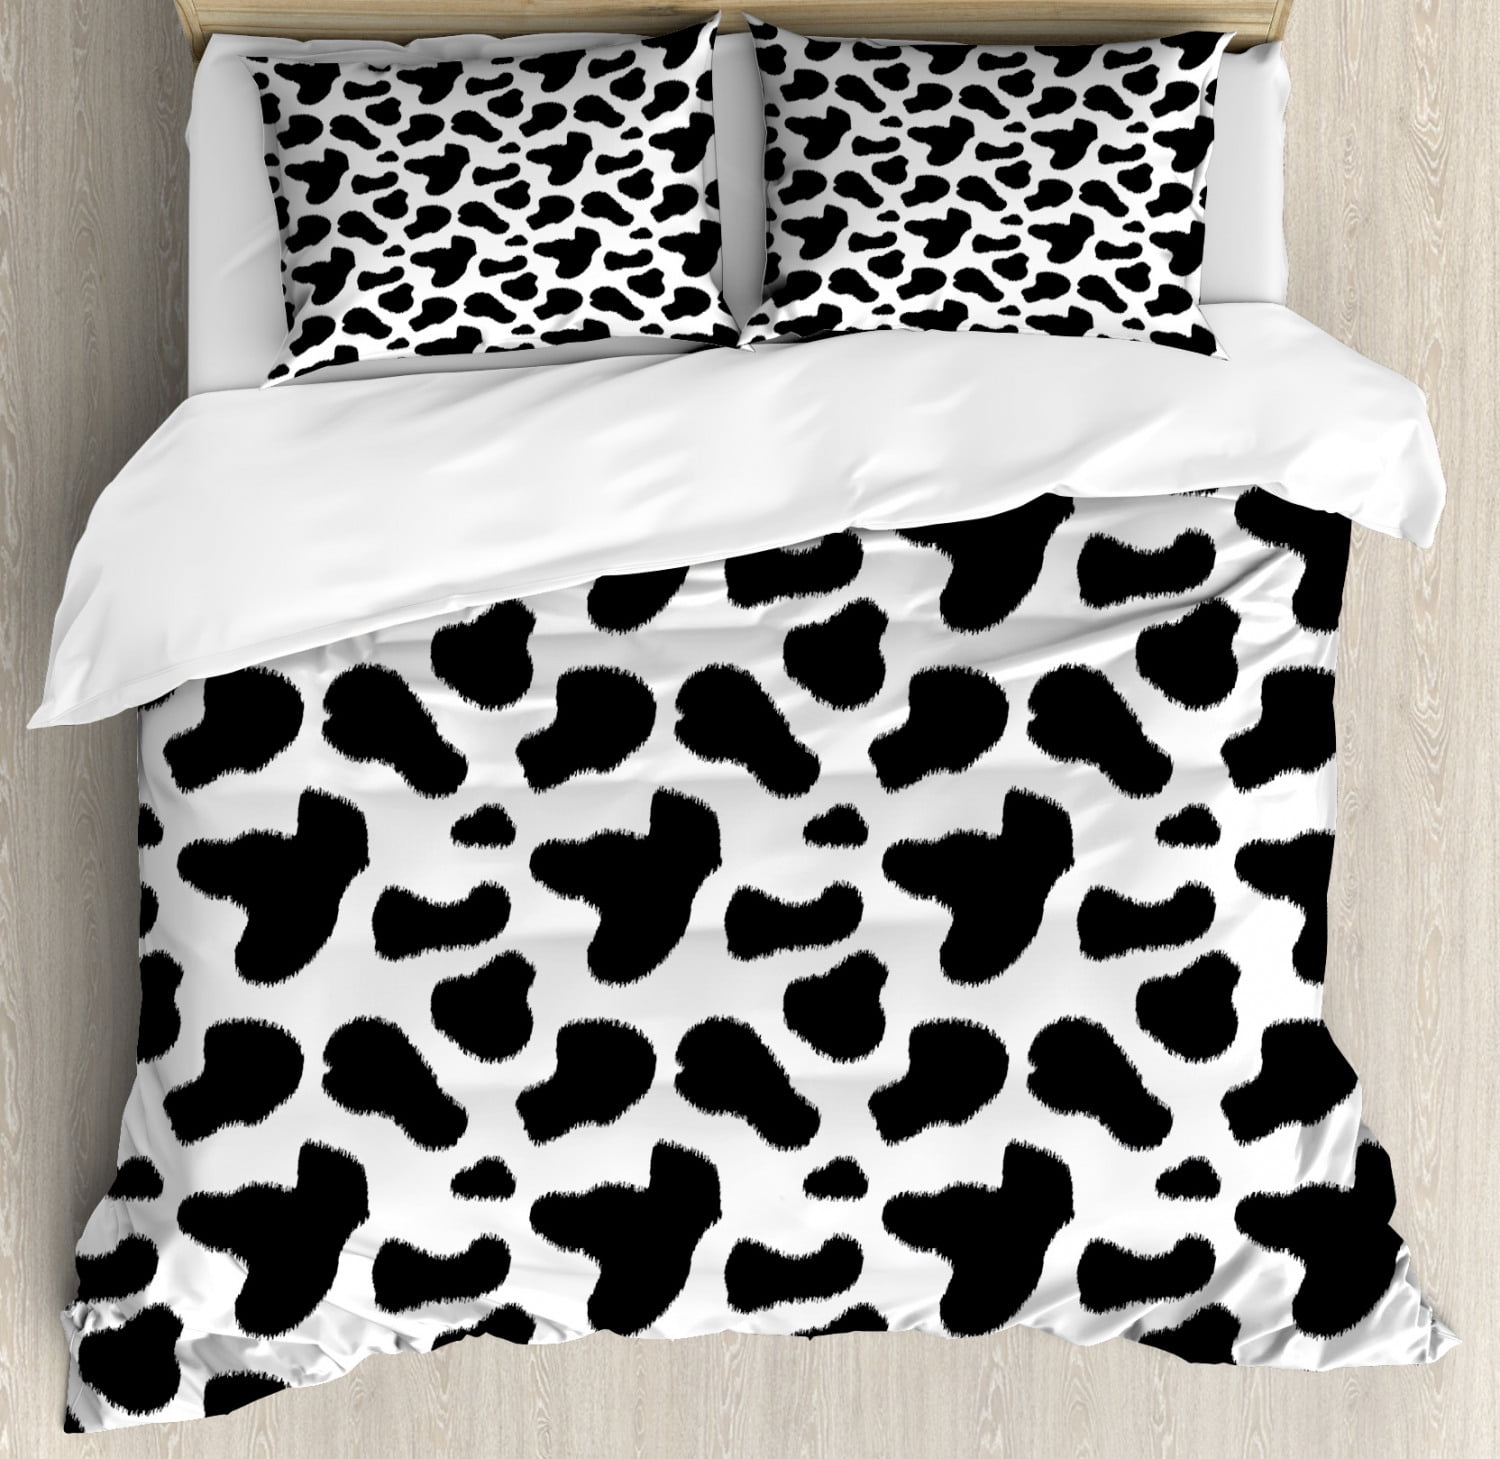 Cow Print Duvet Cover Set King Size, Cheetah Print Duvet Cover Twin